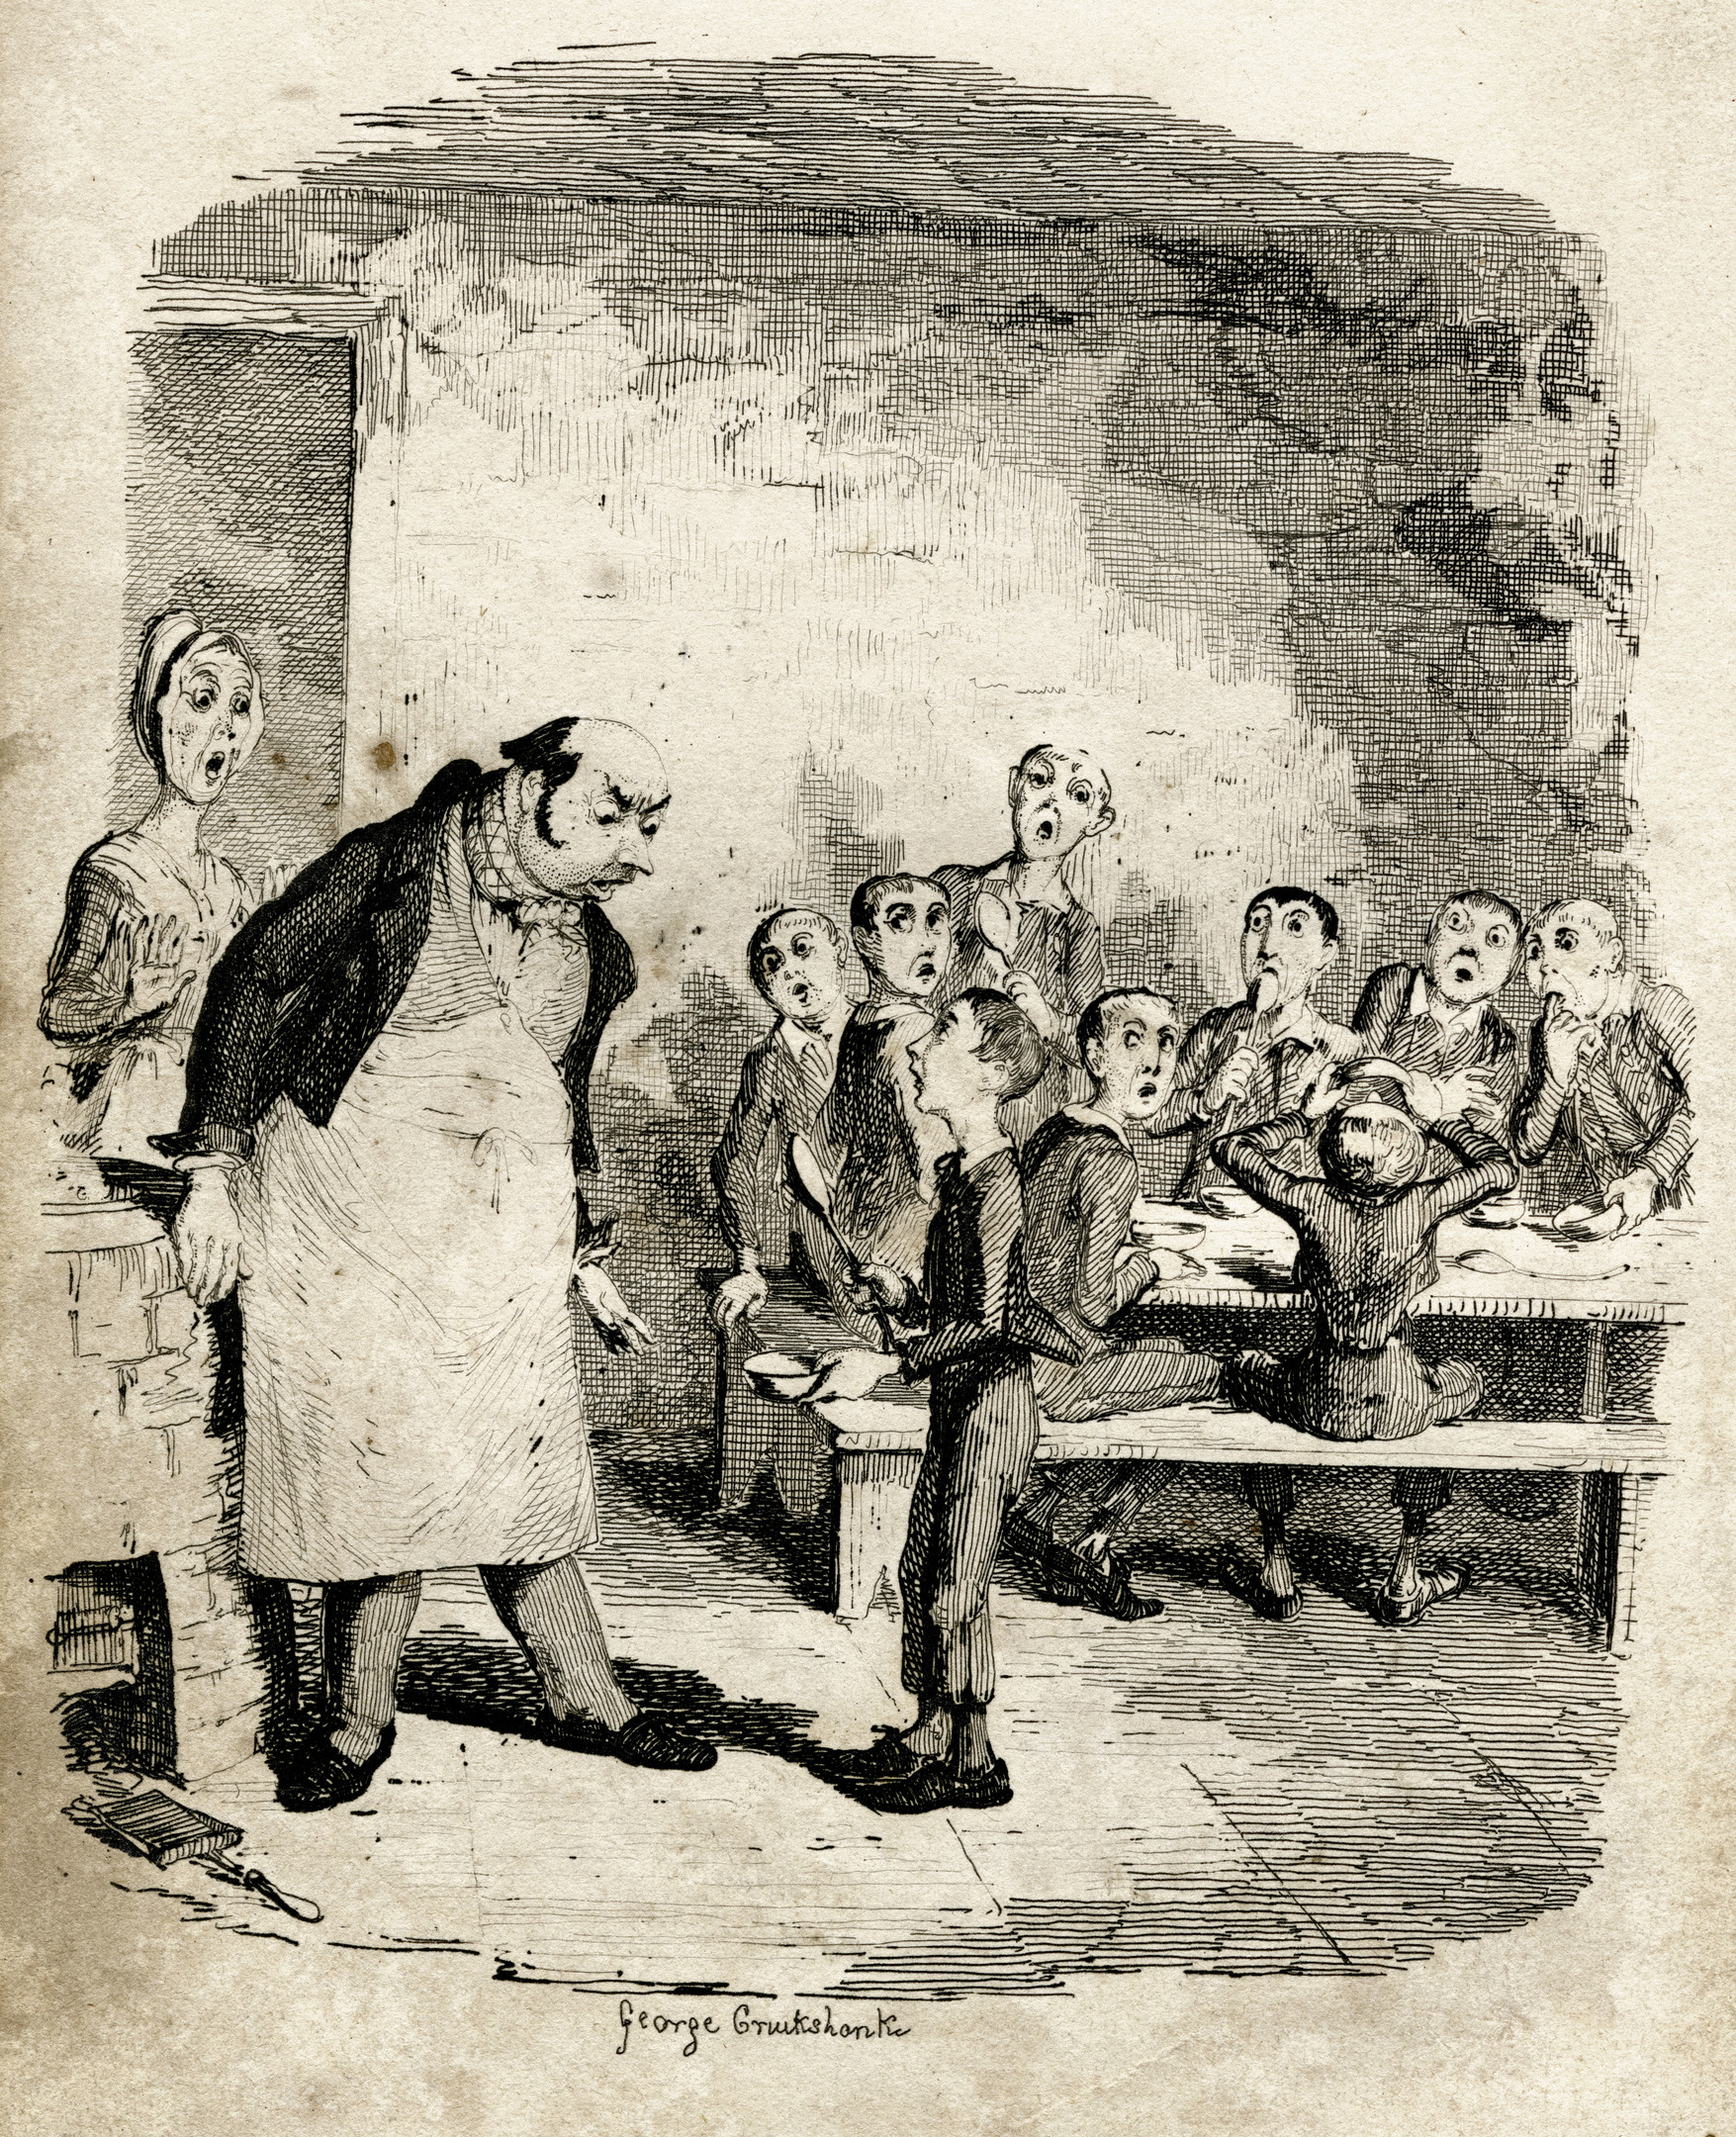 Oliver Twist: Oliver asking for more by George Cruikshank, from Oliver Twist (1838)